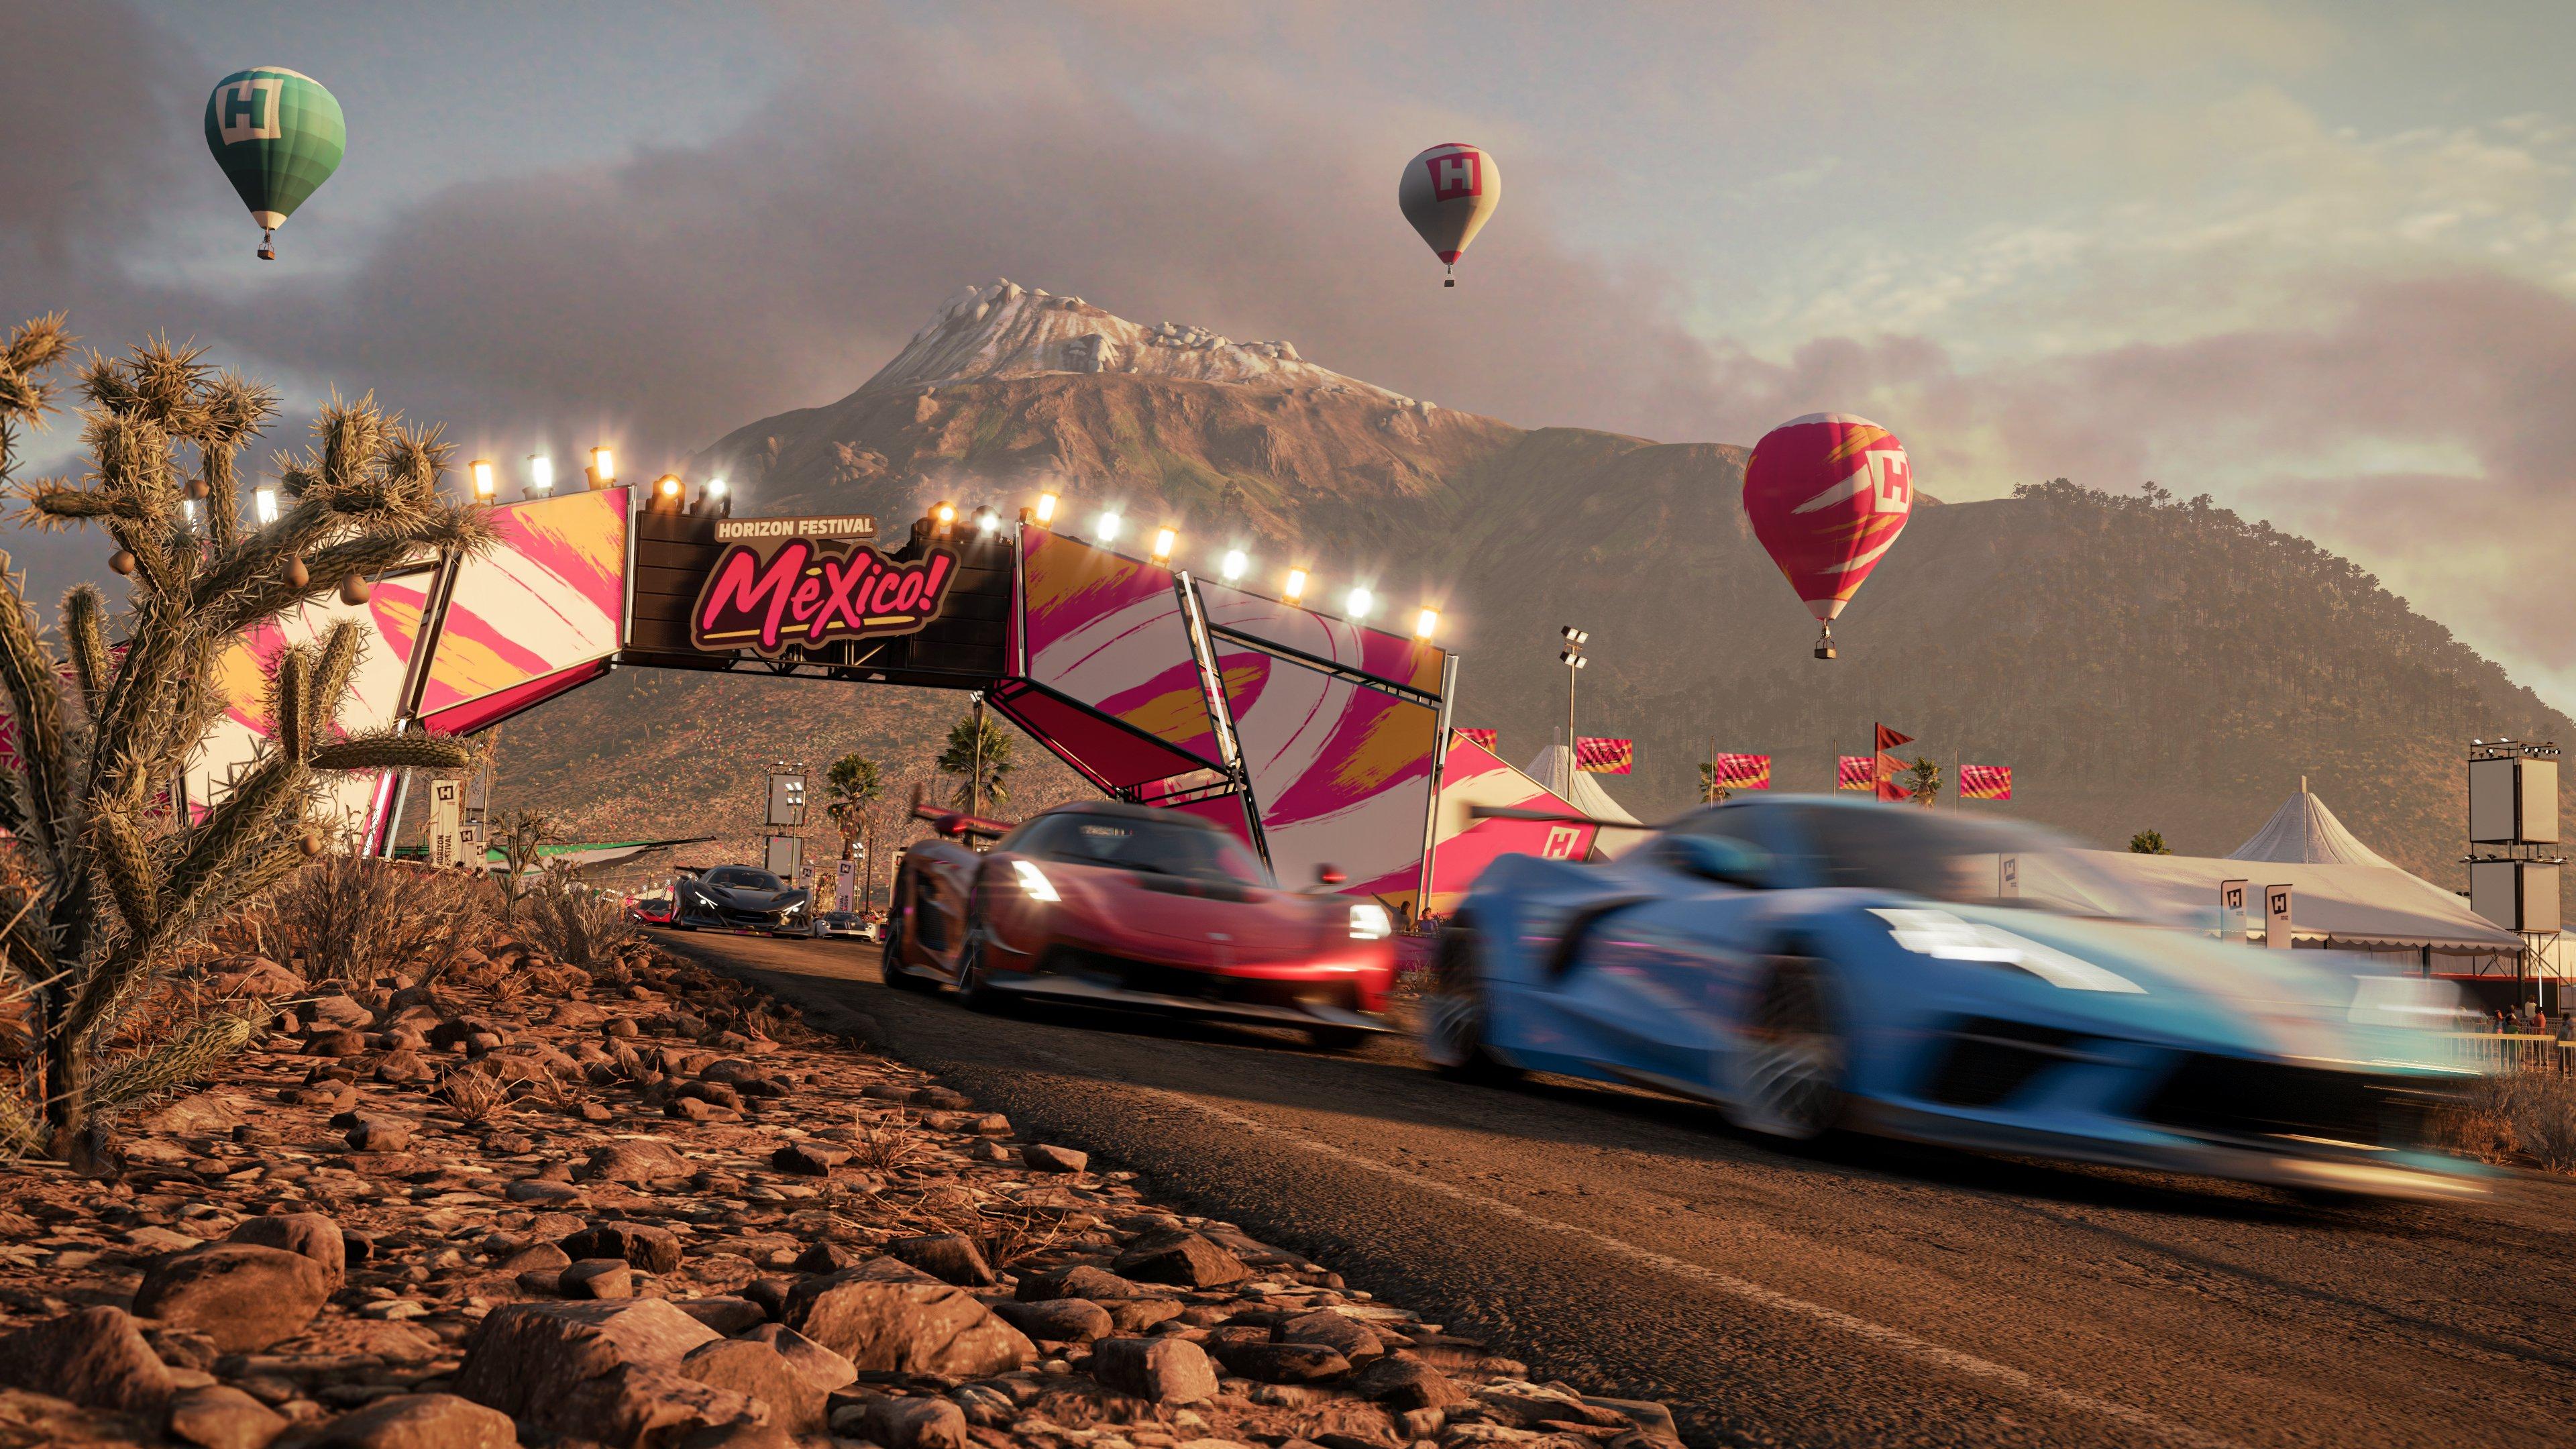 Forza Motorsport: Premium Edition - Xbox Series X|S/Xbox One/PC (Digital)